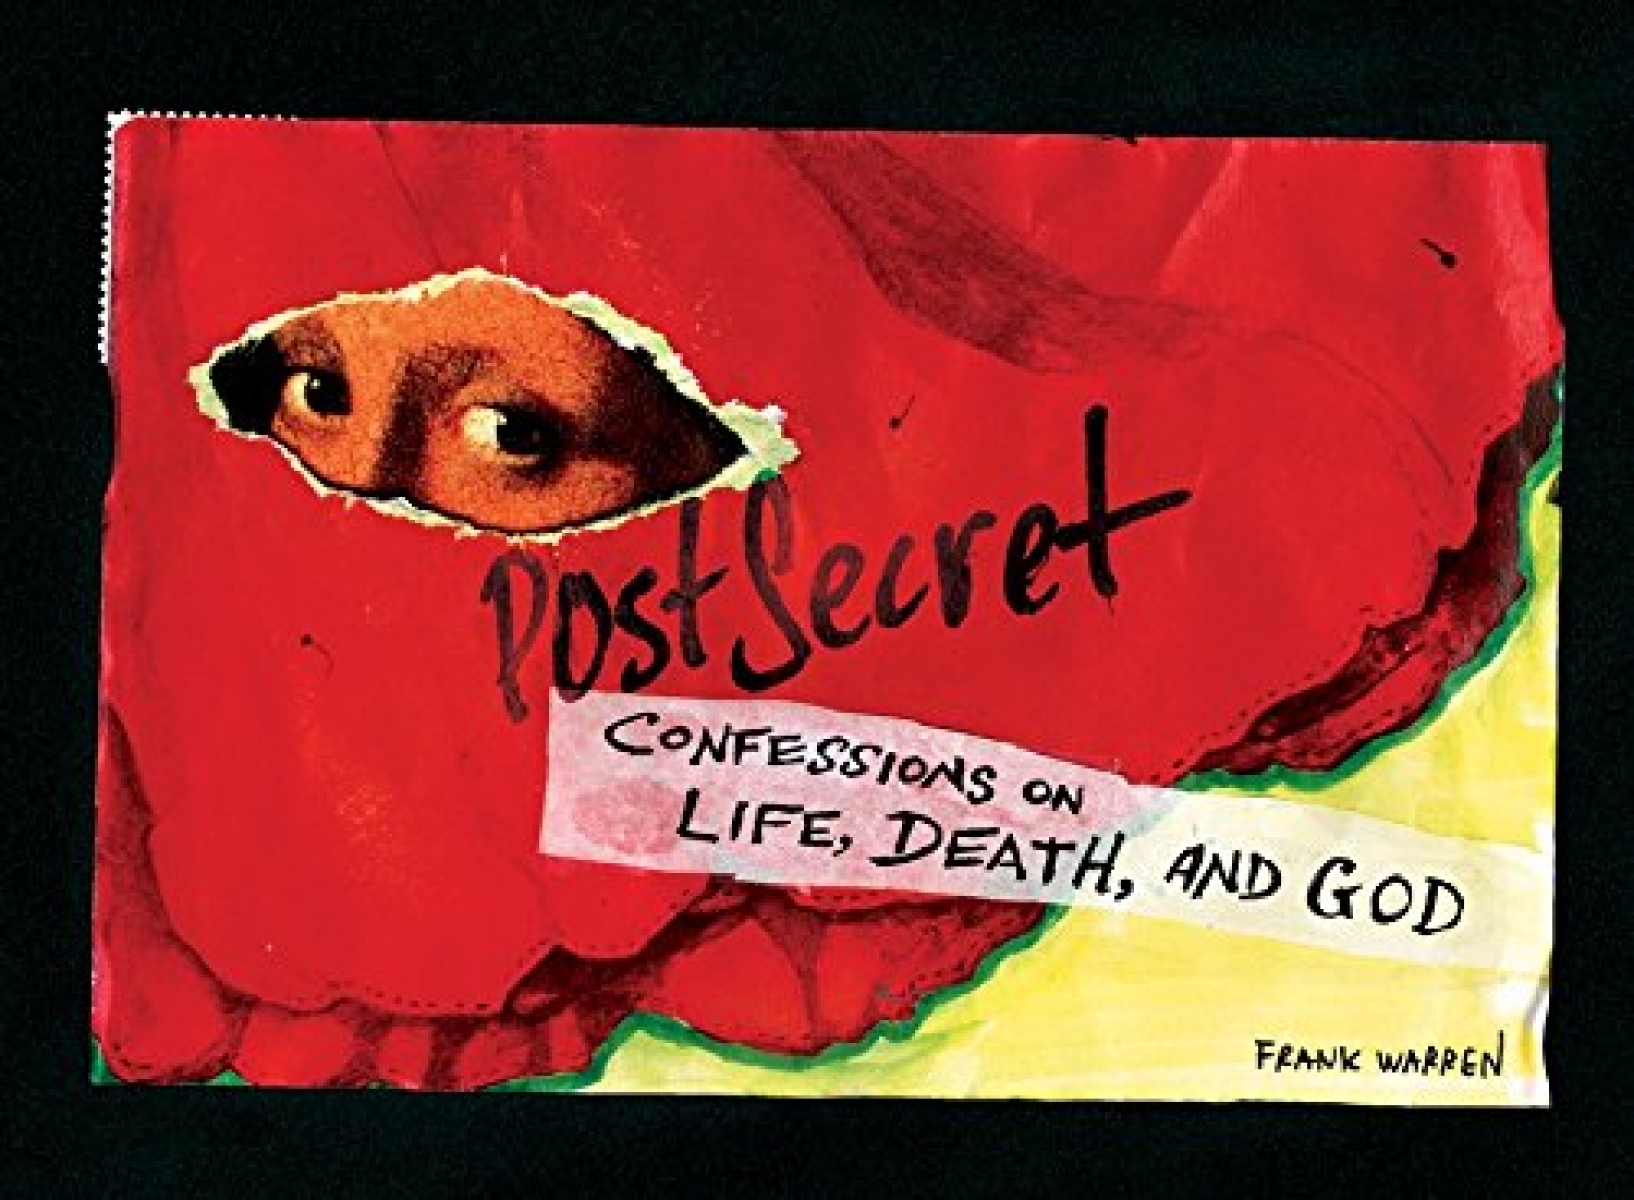 Warren, F PostSecret: Confessions on Life, Death & God  (HB) 